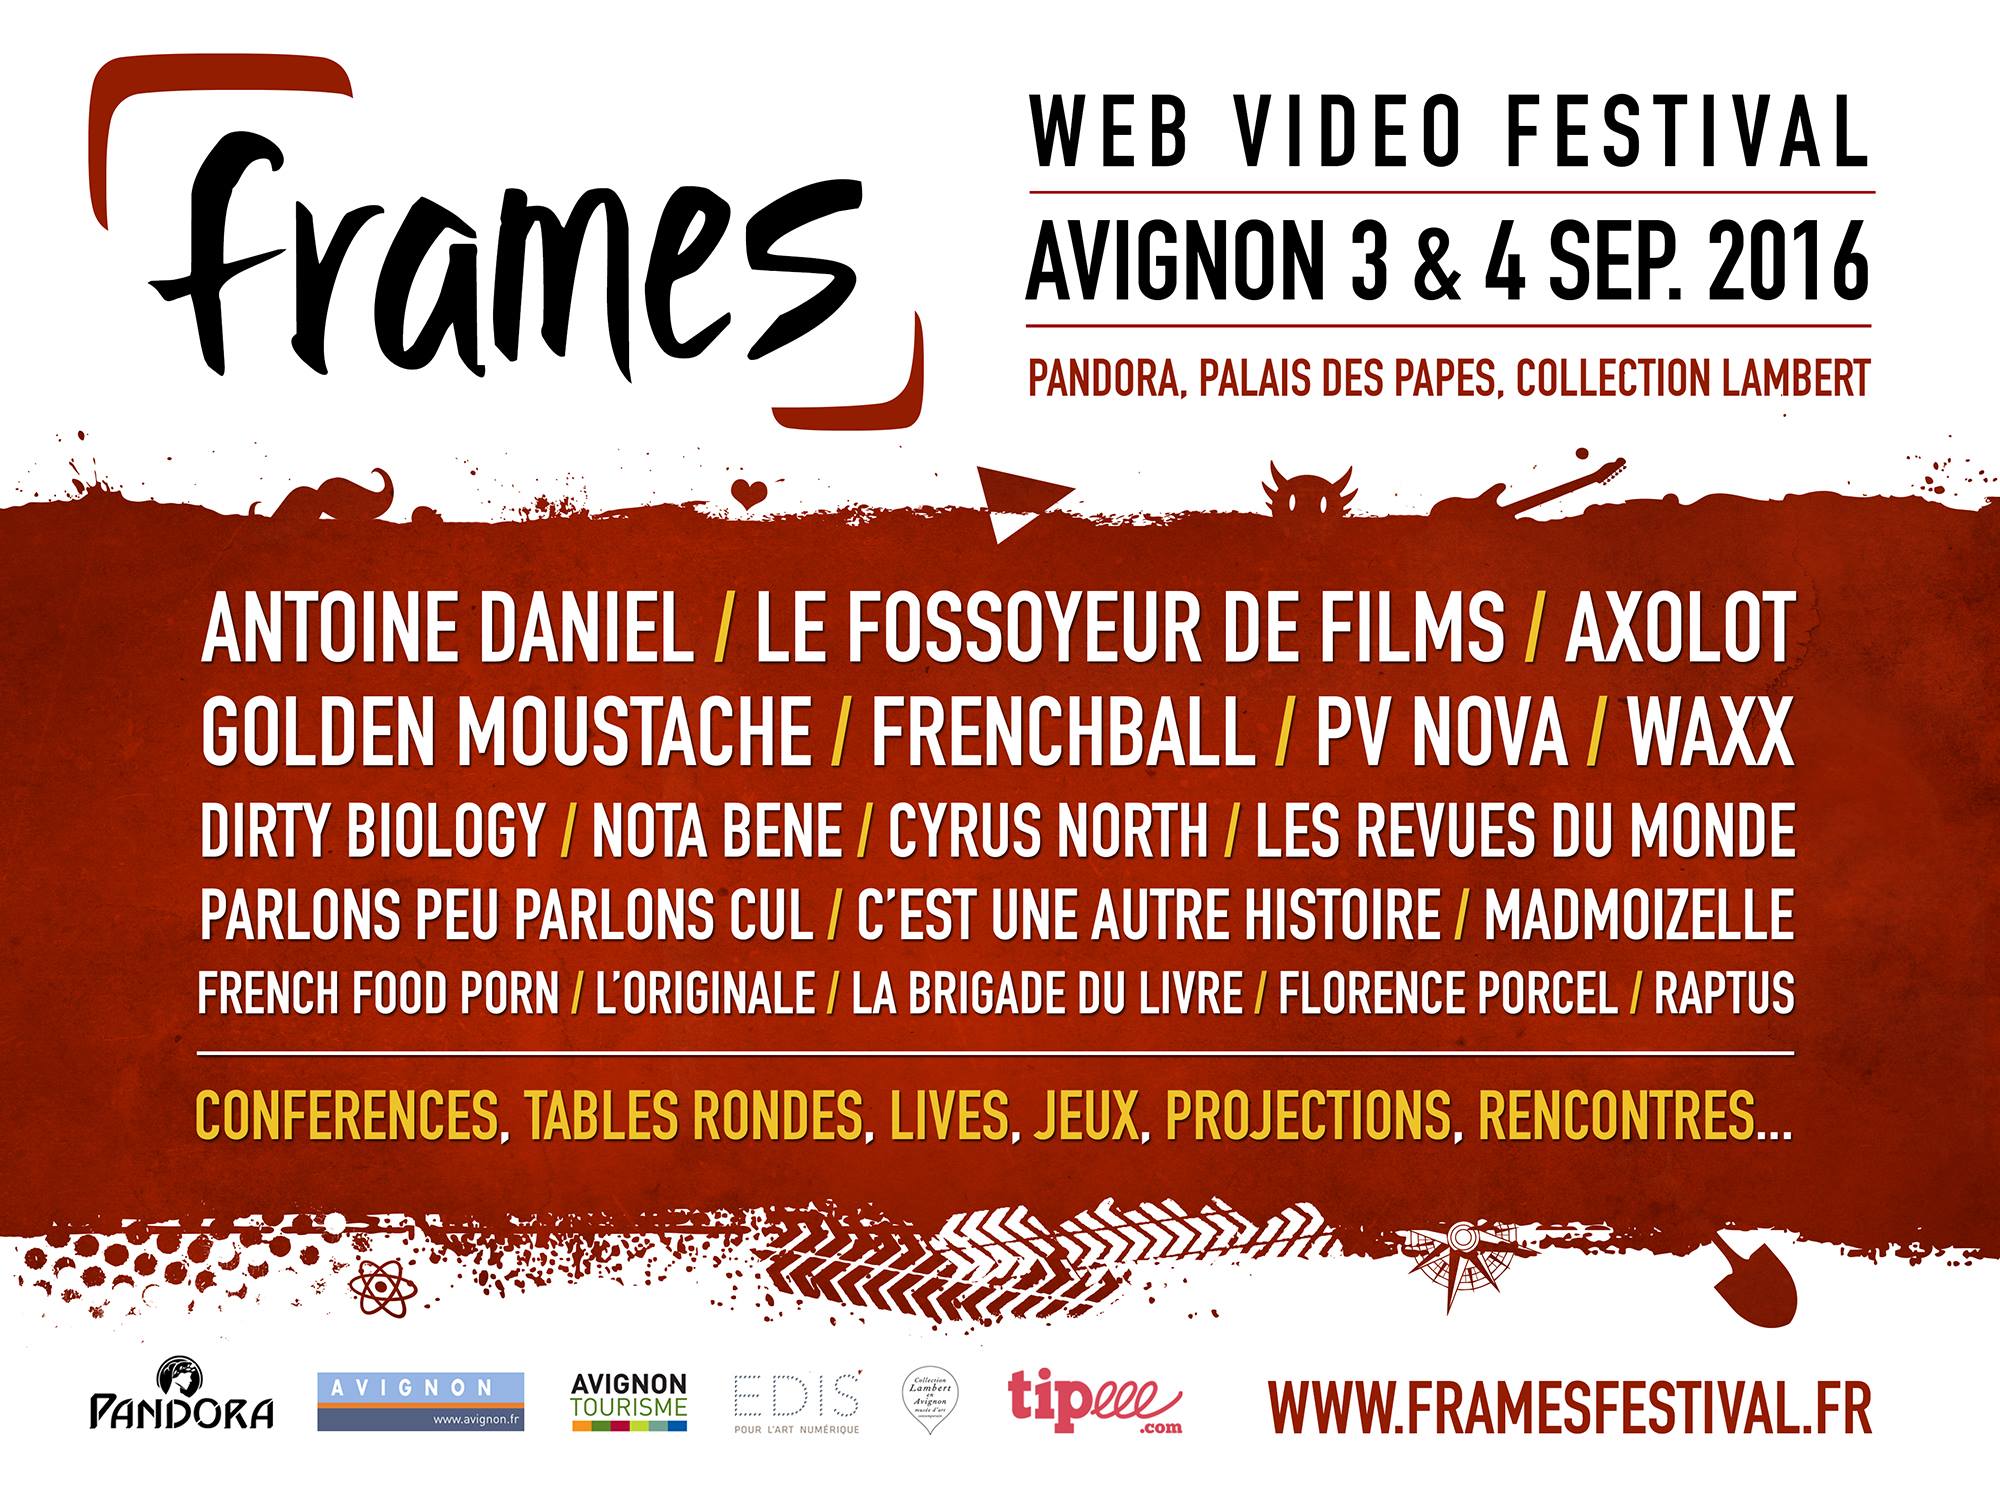 Frames festival 2016 : photo du programme officielle du Frames festival 2016 à Avignon